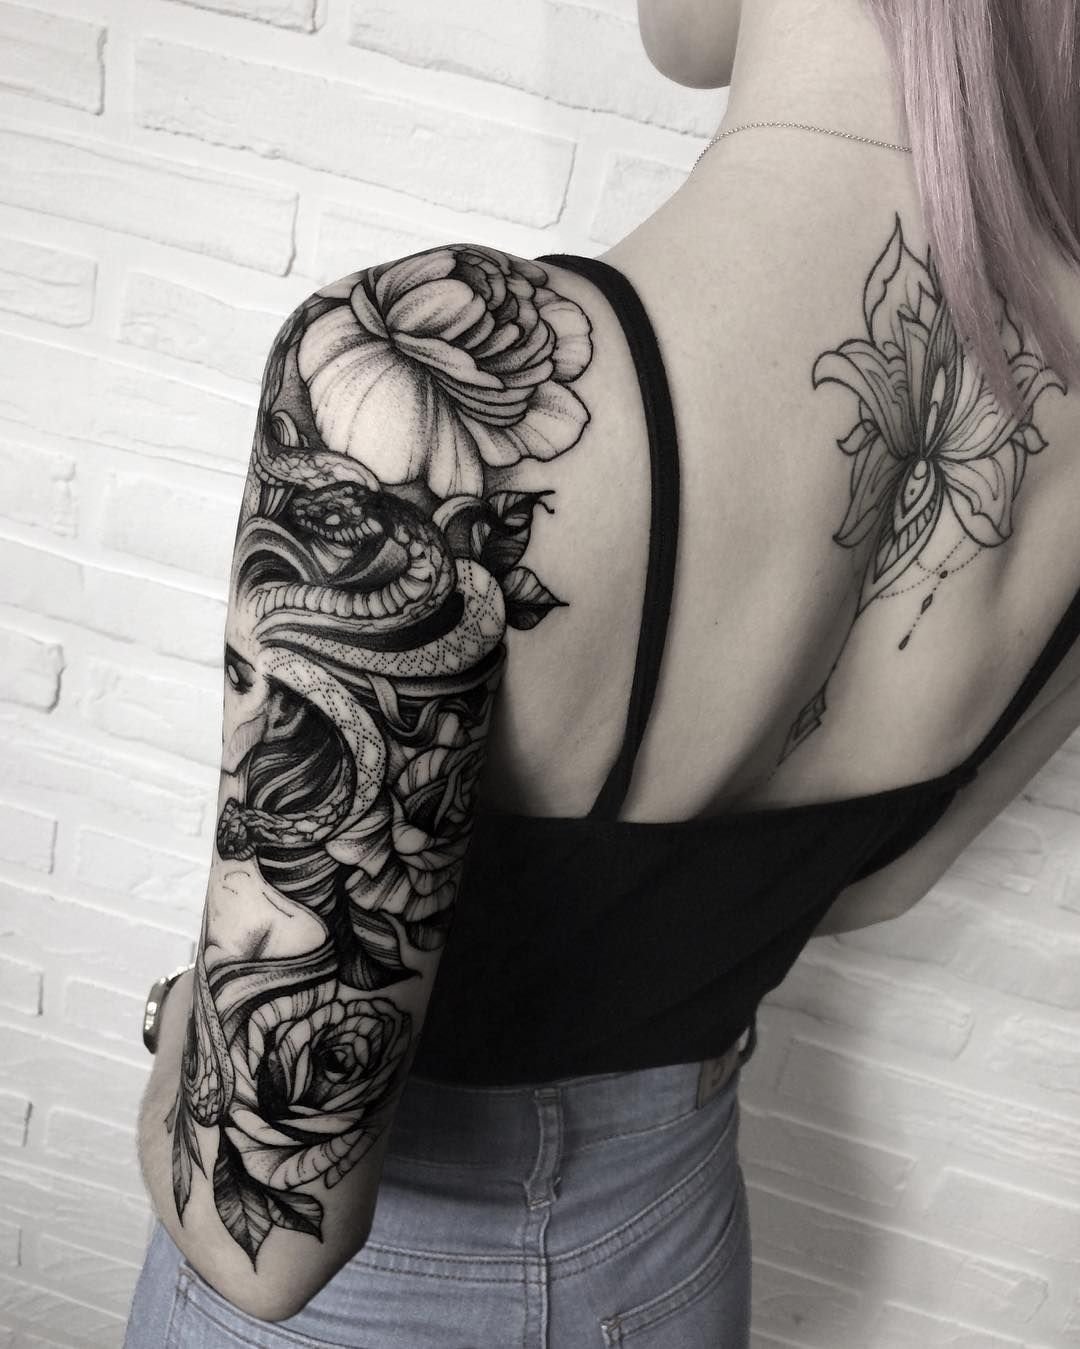 10 Beautiful Sleeve Tattoos For Women Ideas snake woman sleeve tattoo idea snake tattoos pinterest woman 2 2022